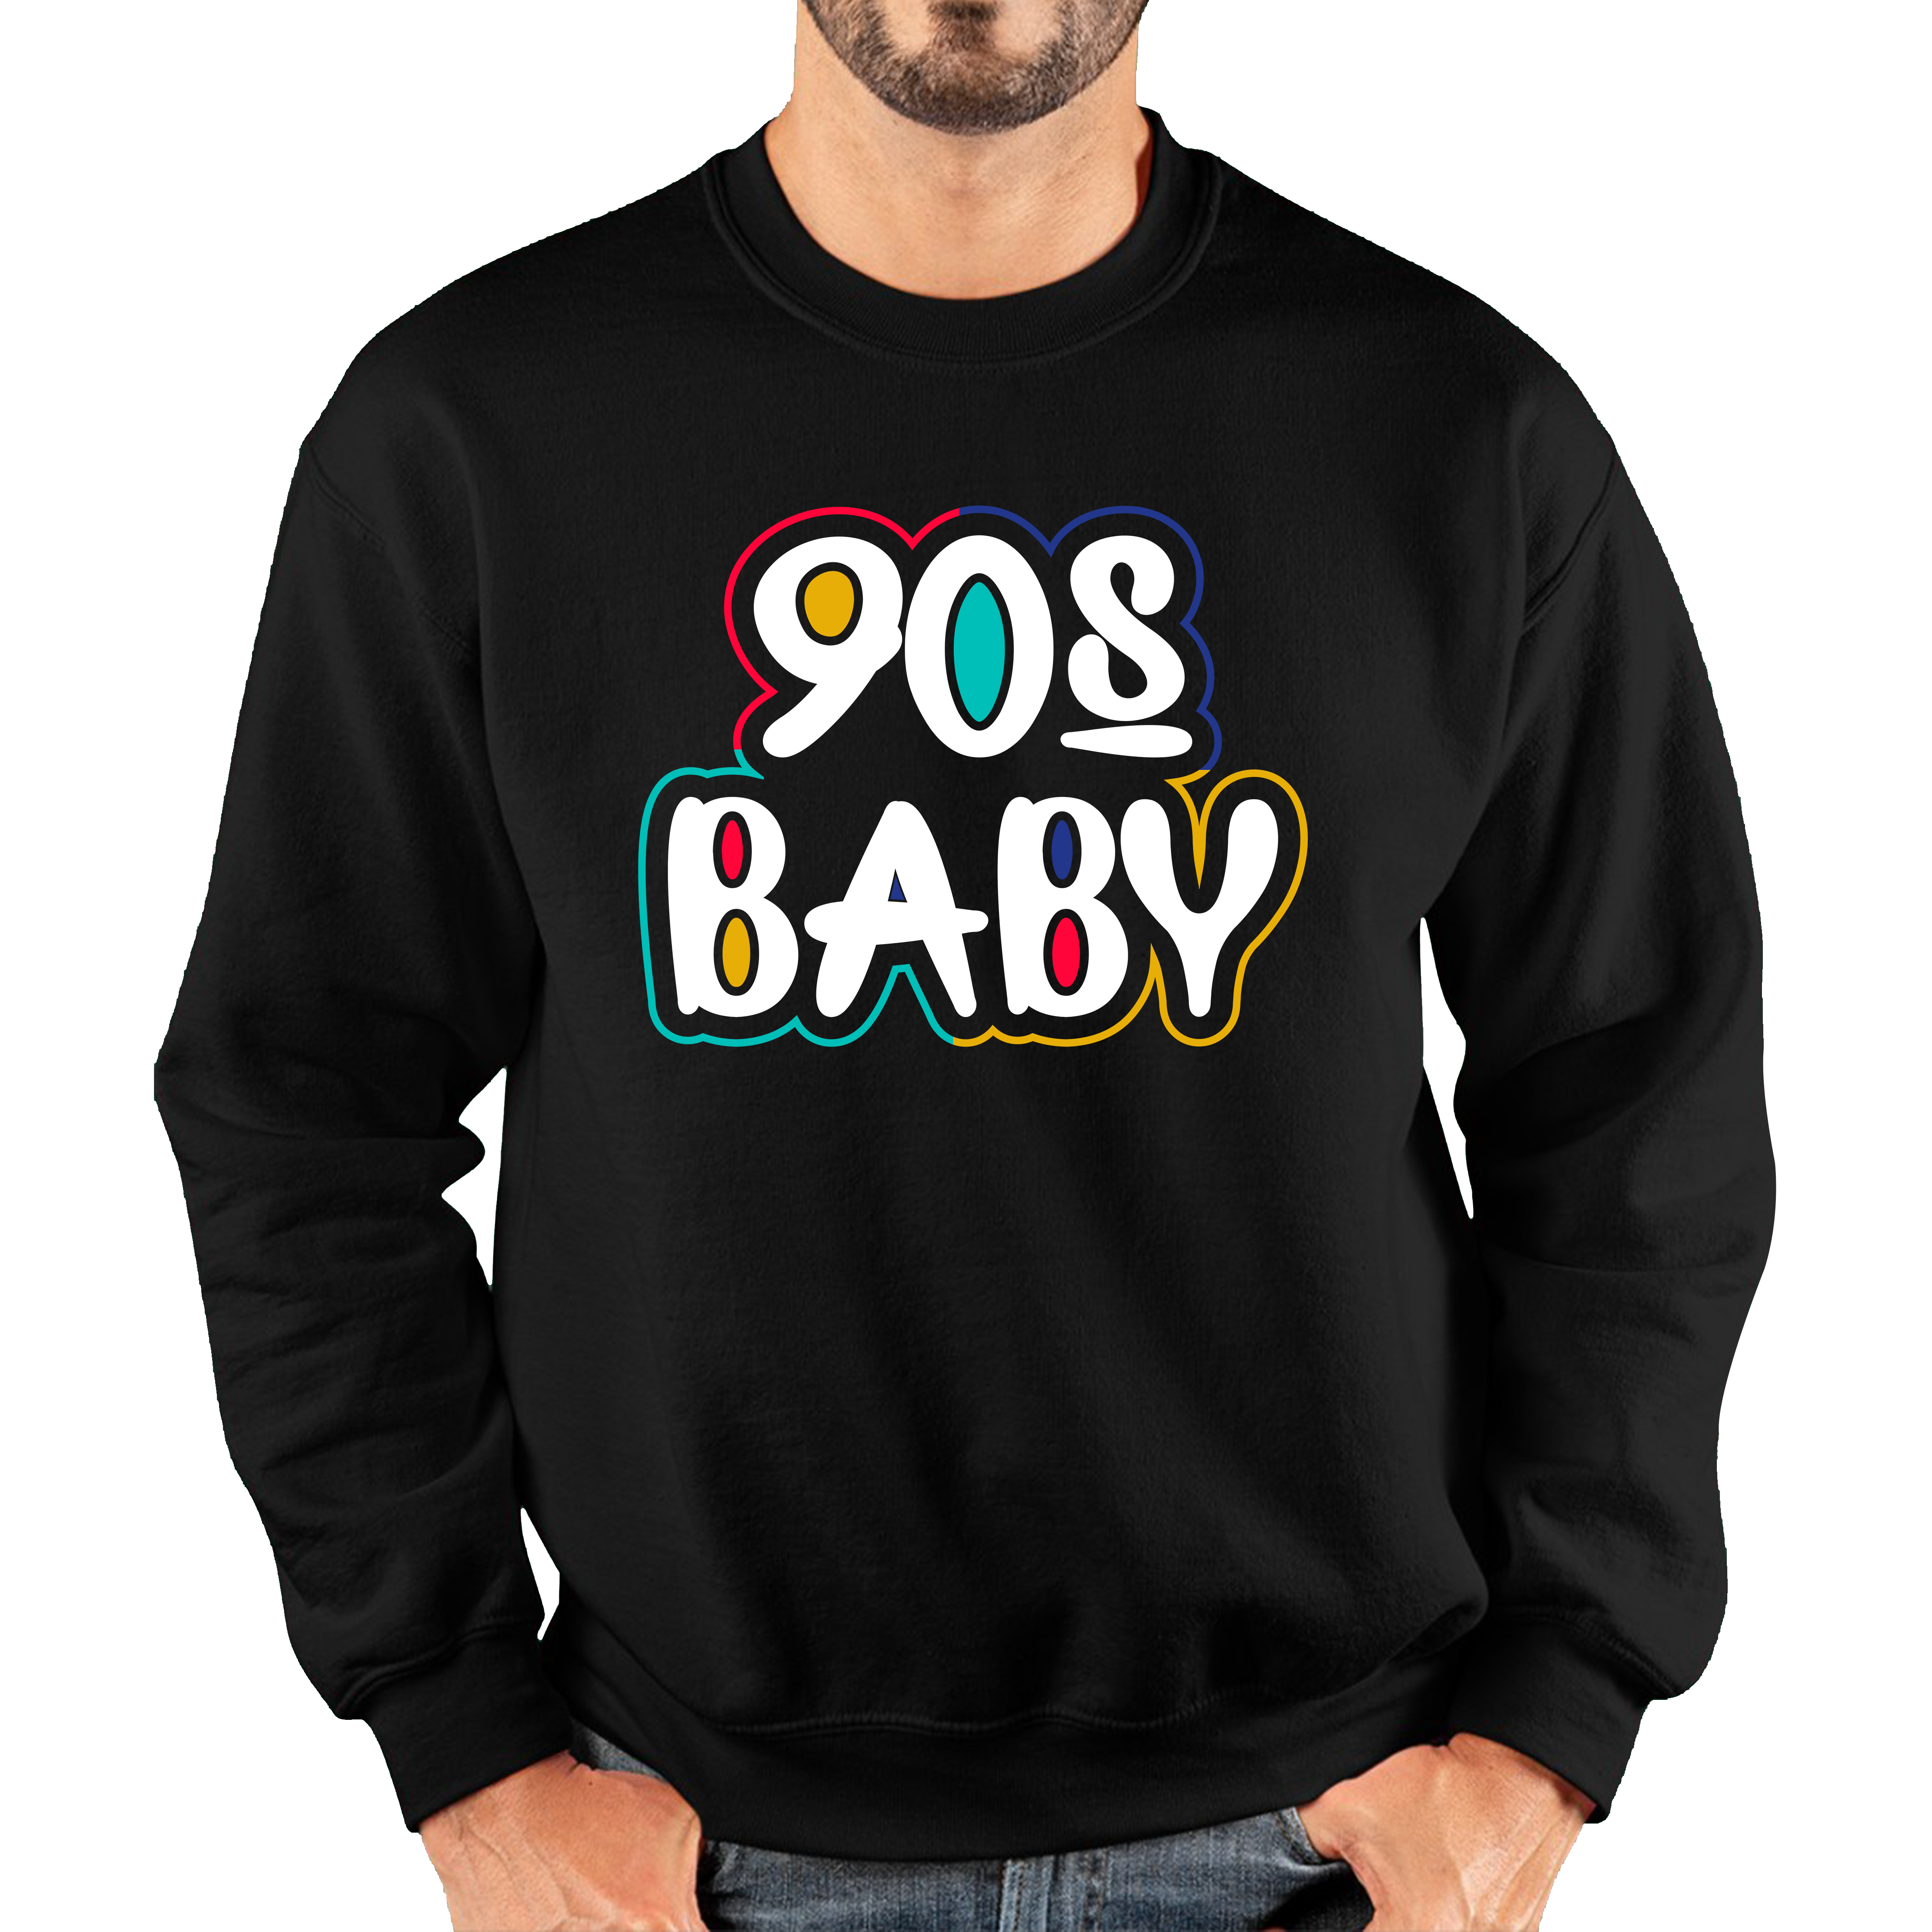 90s Baby Jumper Awesome cool 90's baby fashion Vintag Funny Joke Novelty Design Unisex Sweatshirt